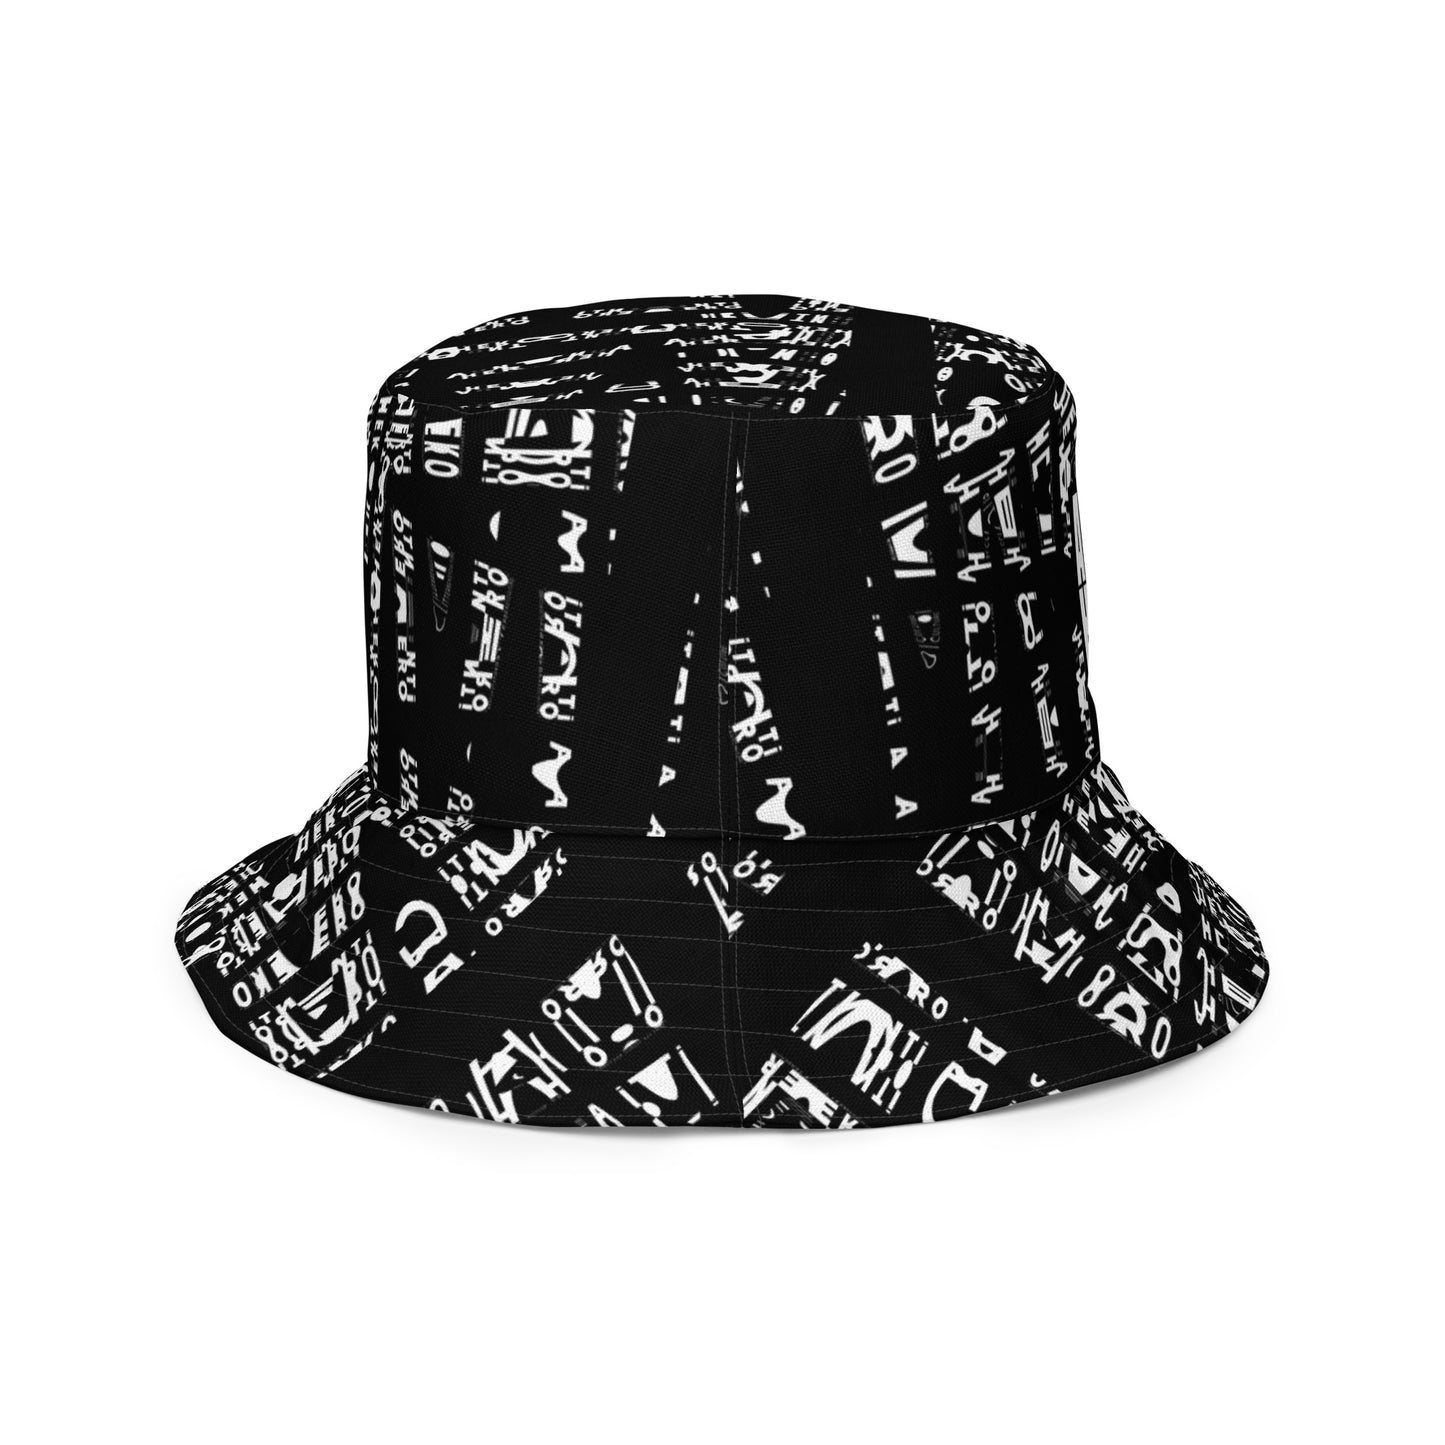 HOT COMB CEREMONIAL - AUNTI HERO Bucket Hat